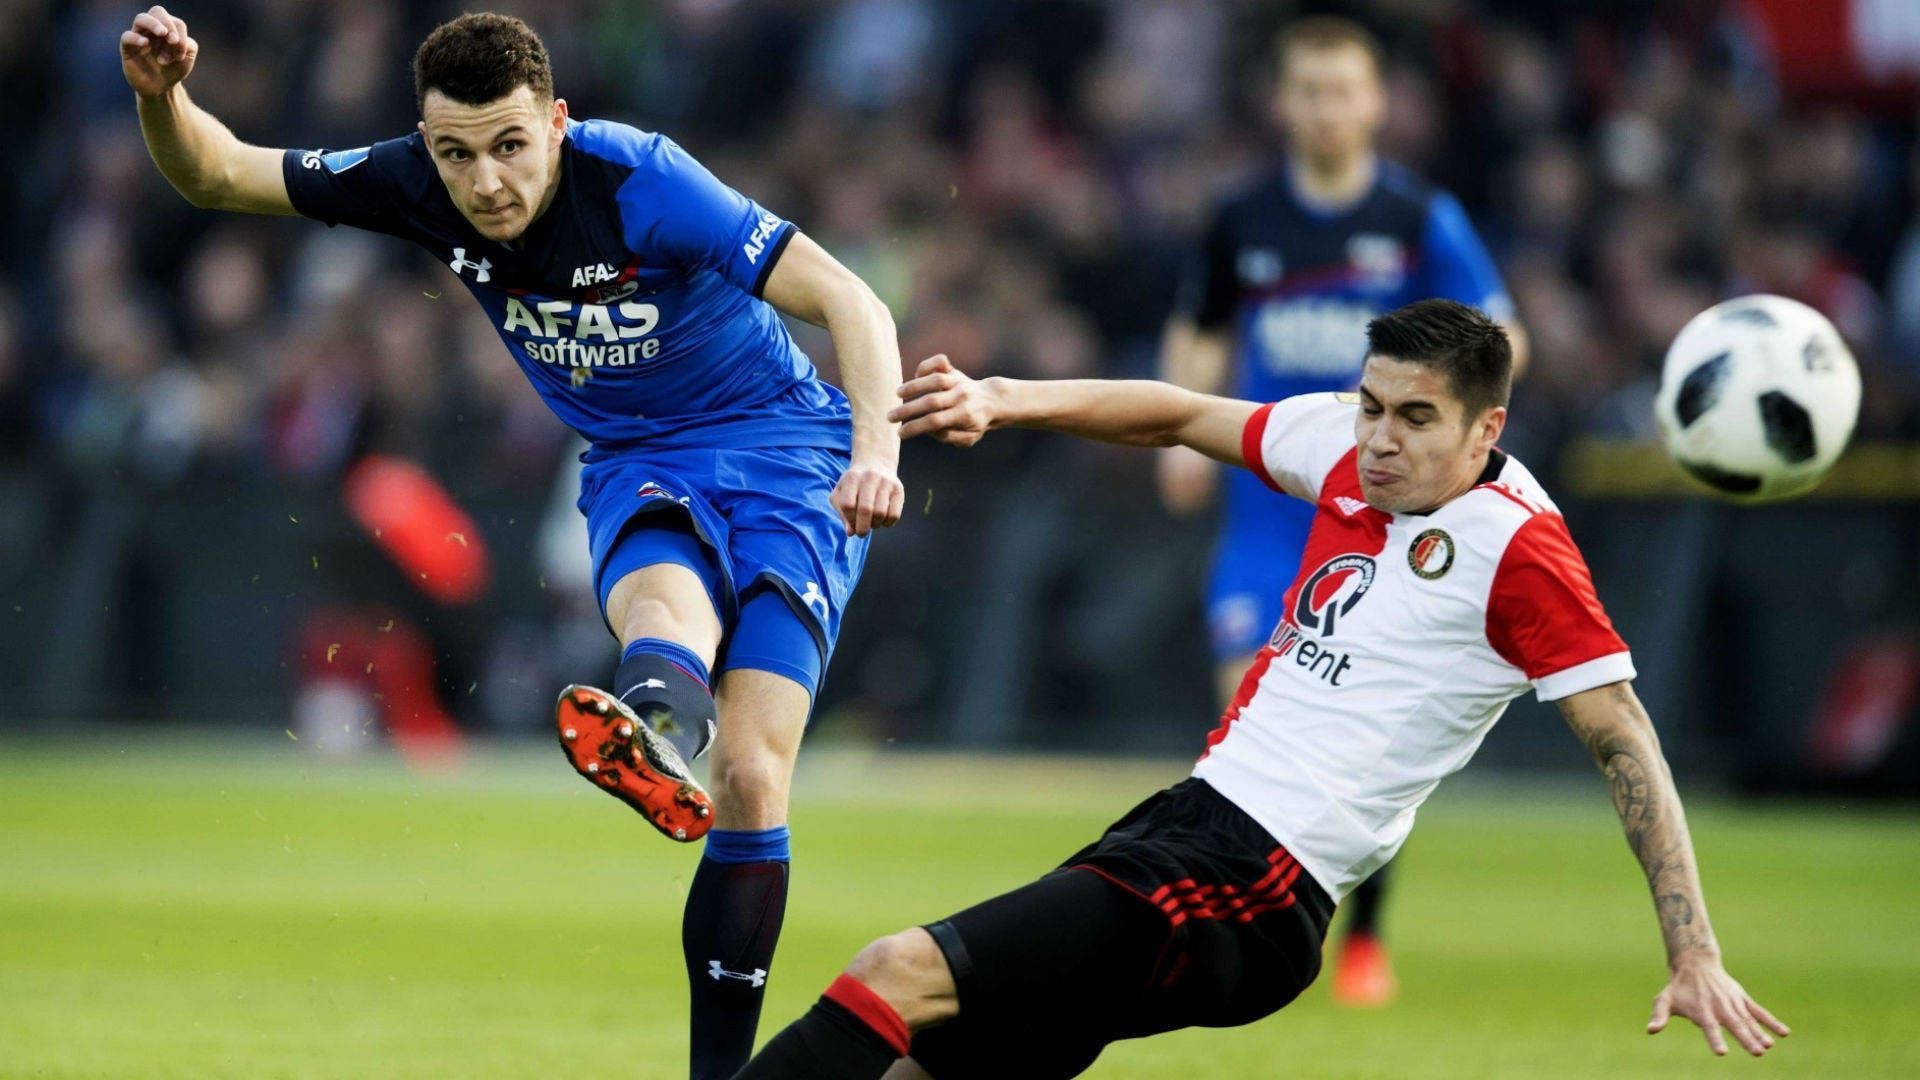 Feyenoord and AZ Alkmaar go head-to-head in an exciting Eredivisie clash on Sunday